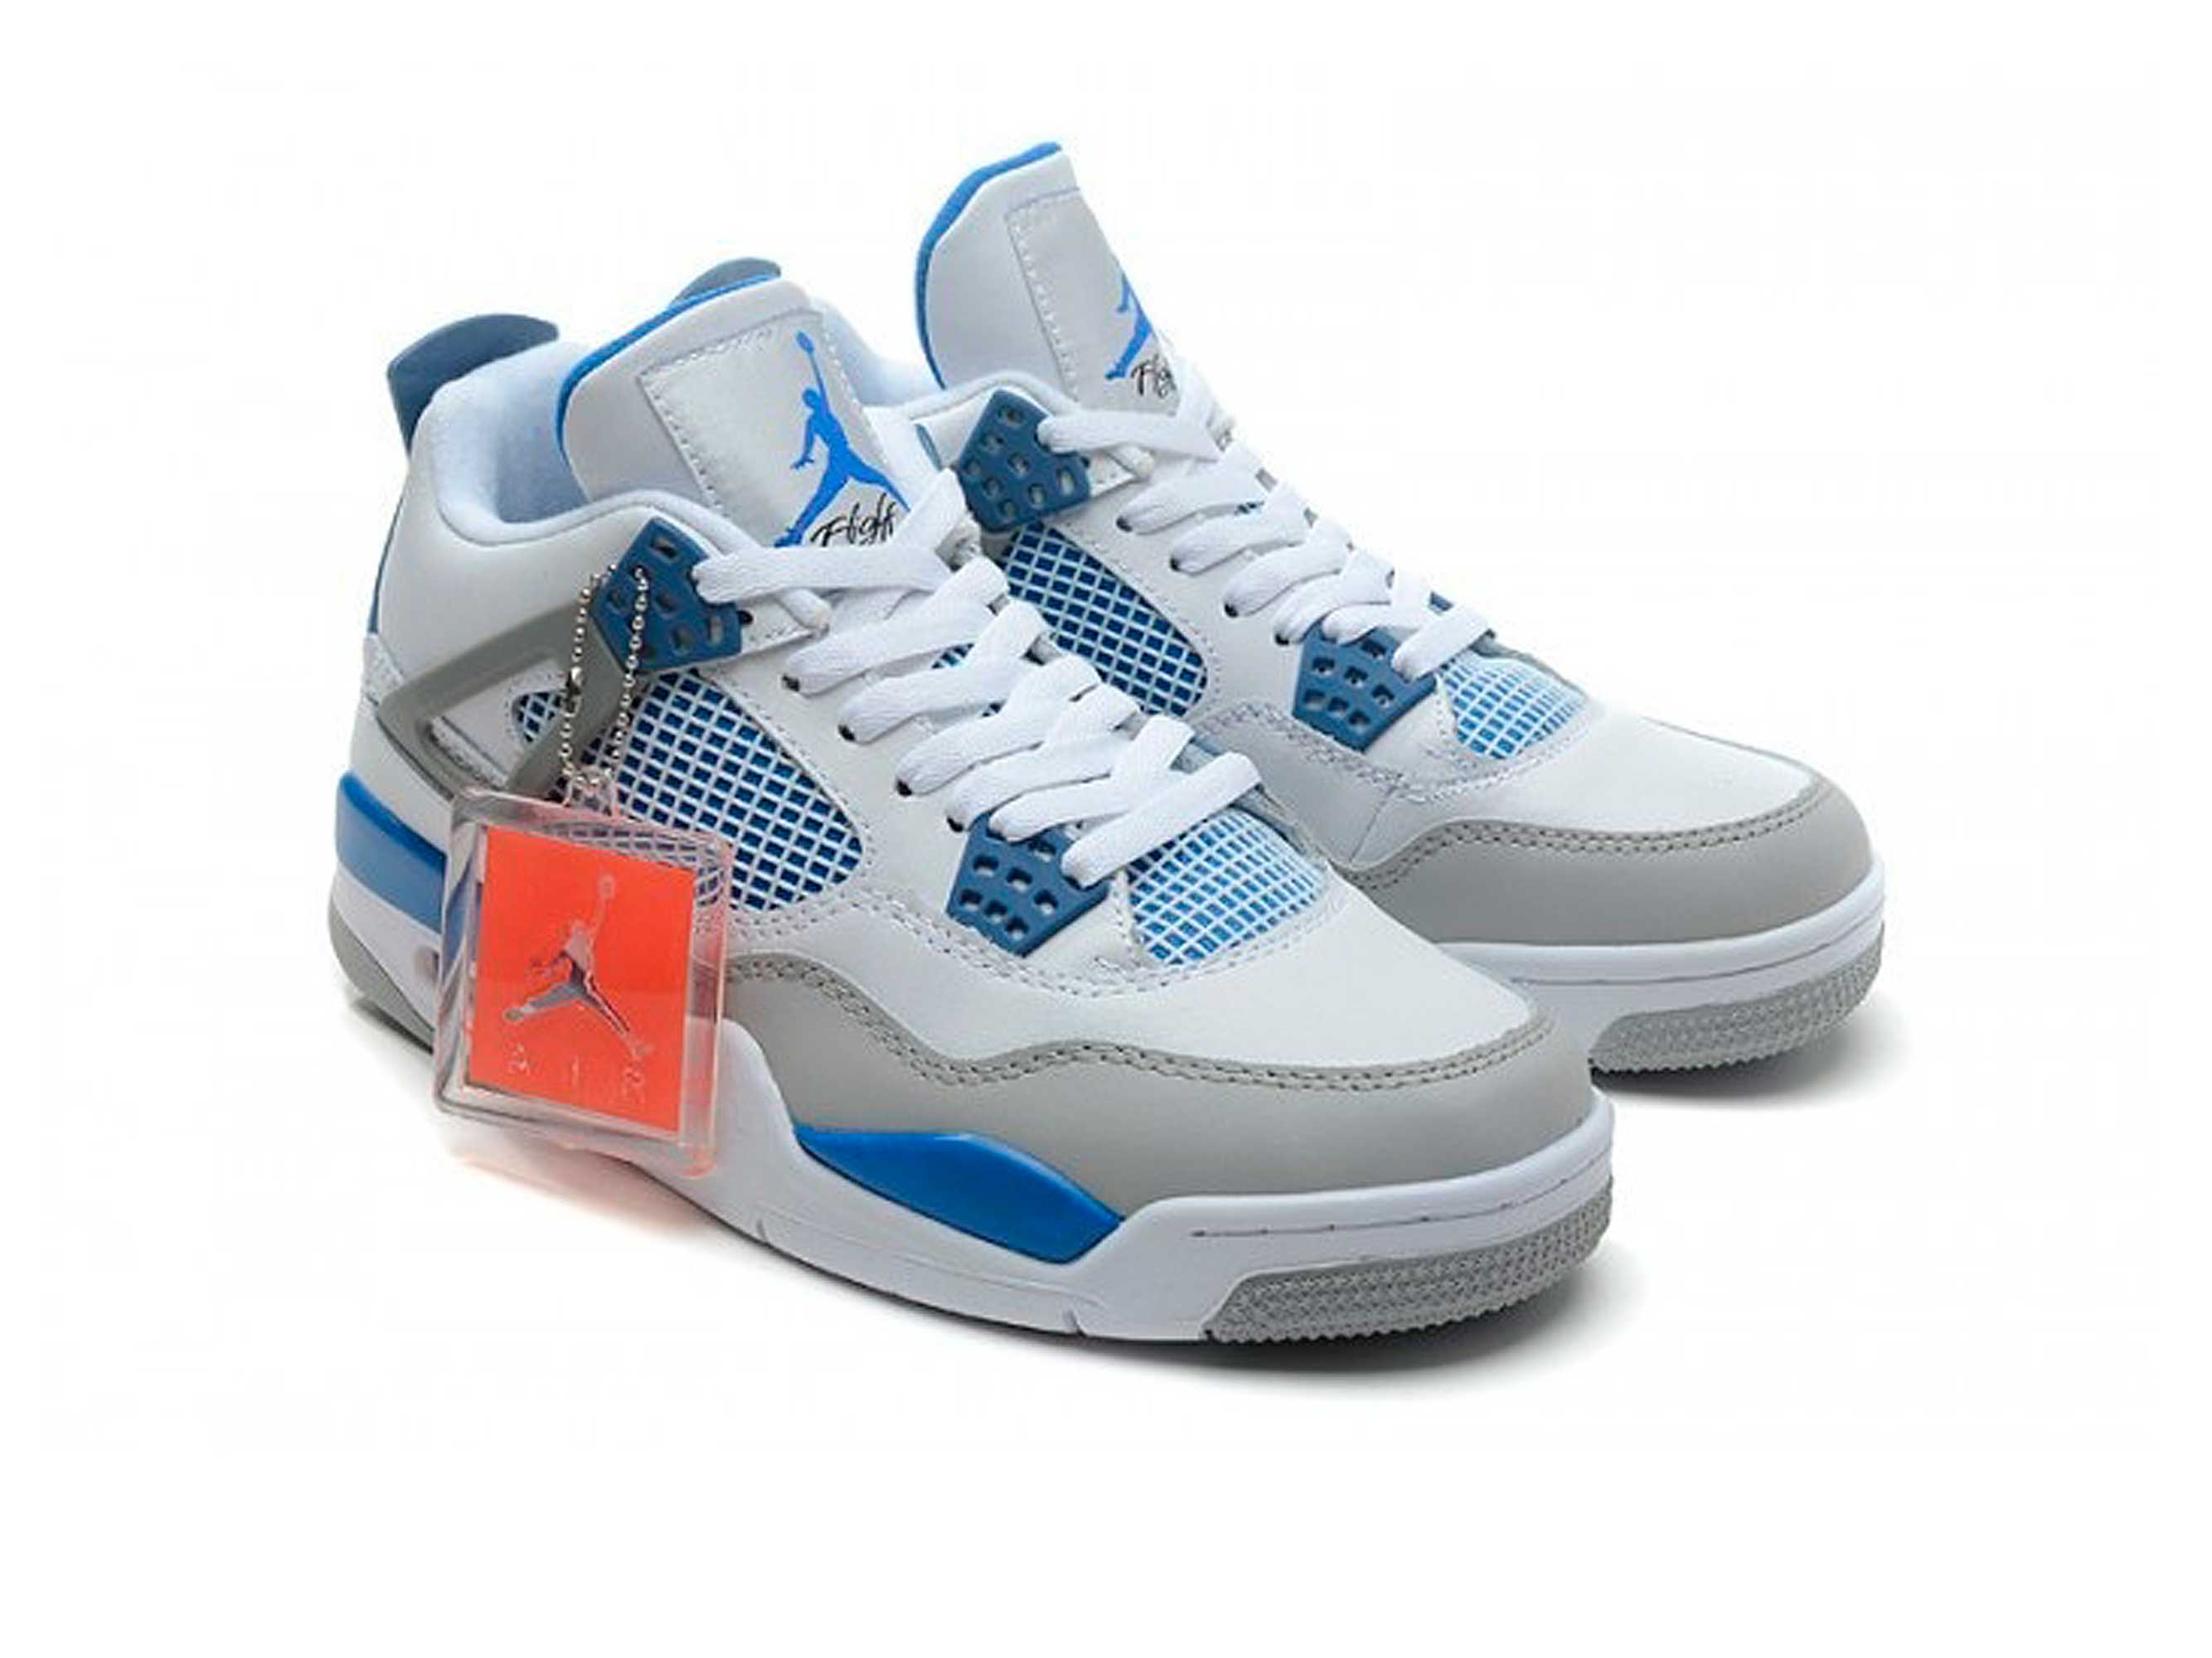 Nike jordan 4 blue. Nike Air Jordan 4 Blue. Nike Air Jordan 4 Retro White Military Blue Grey. Nike Air Jordan 4 White. Nike Air Jordan 4 Retro White.